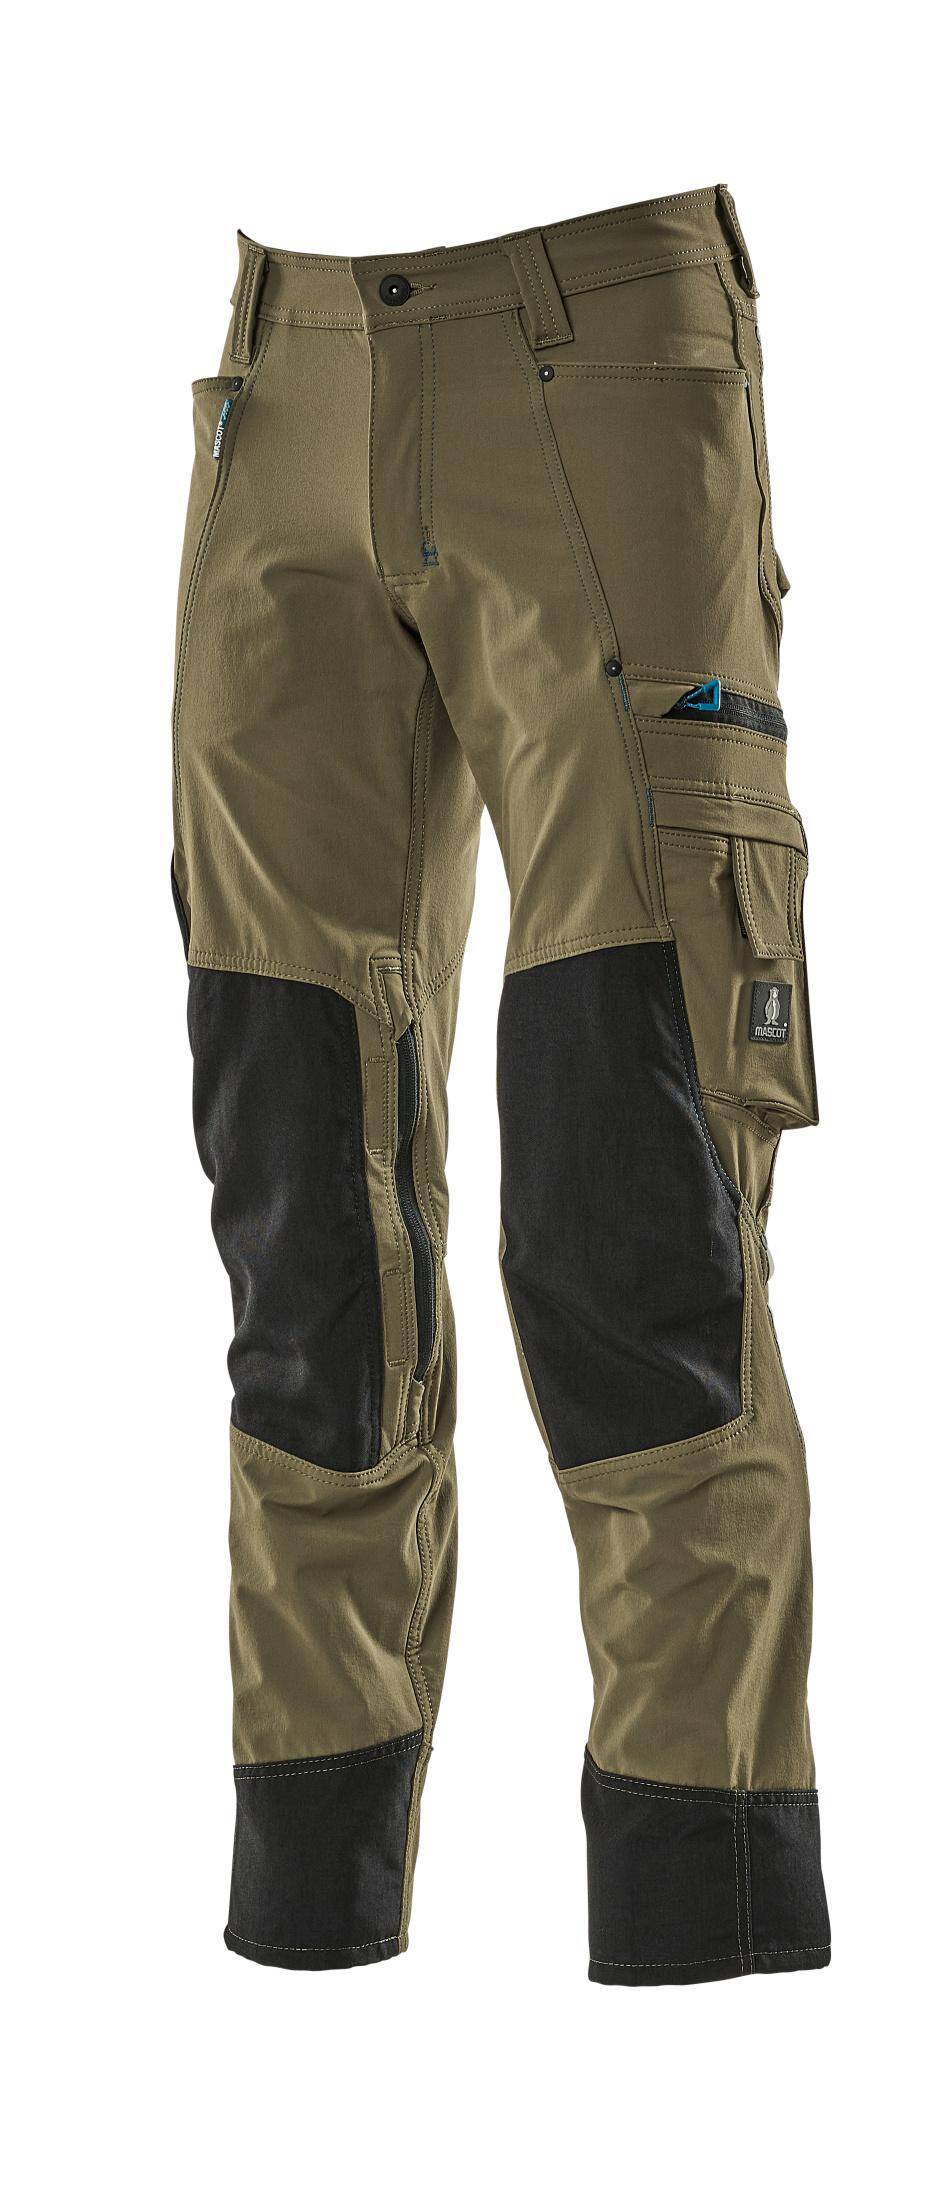 Trousers with kneepad pockets Advanced khaki